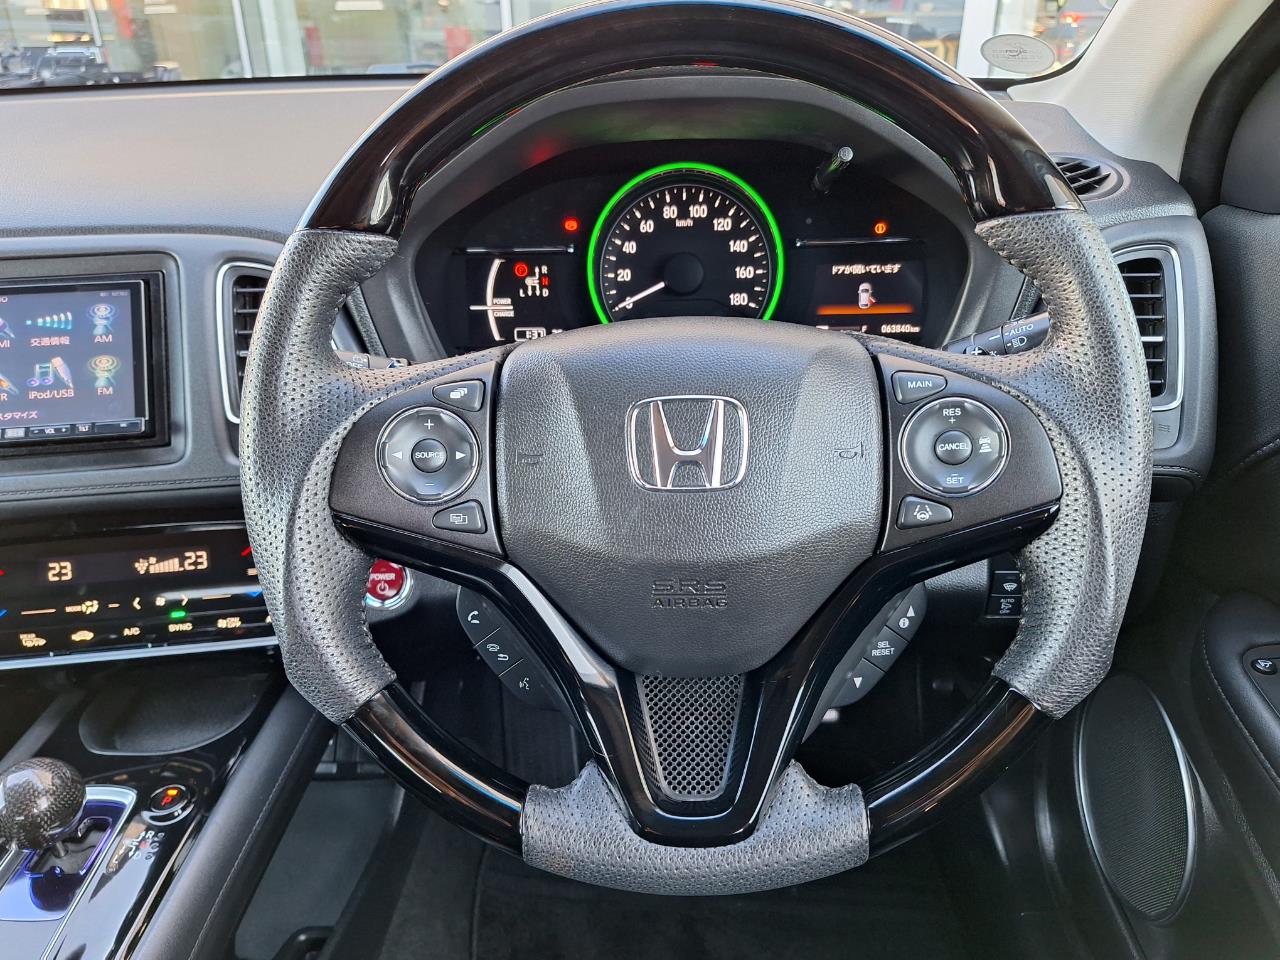 2017 Honda VEZEL